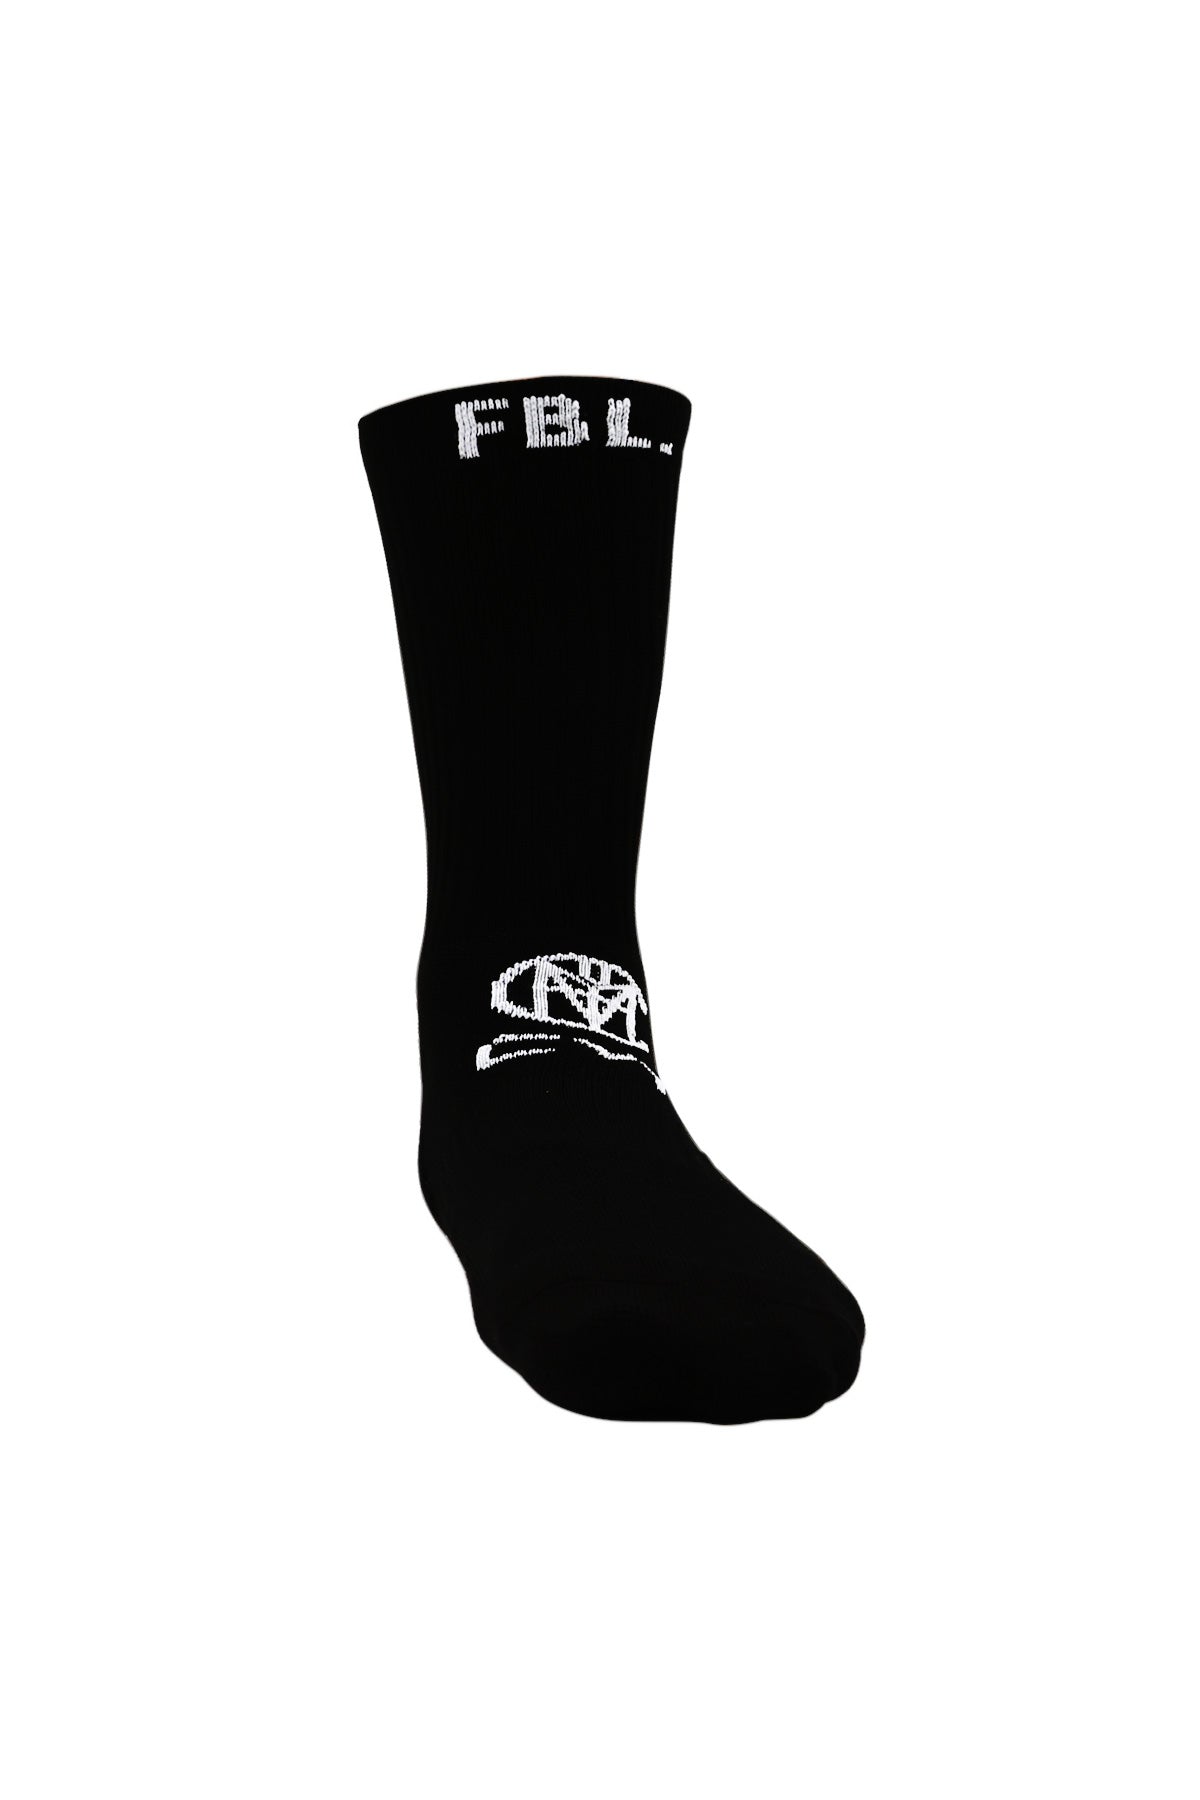 The Palm Sock- Black  California Grip Socks